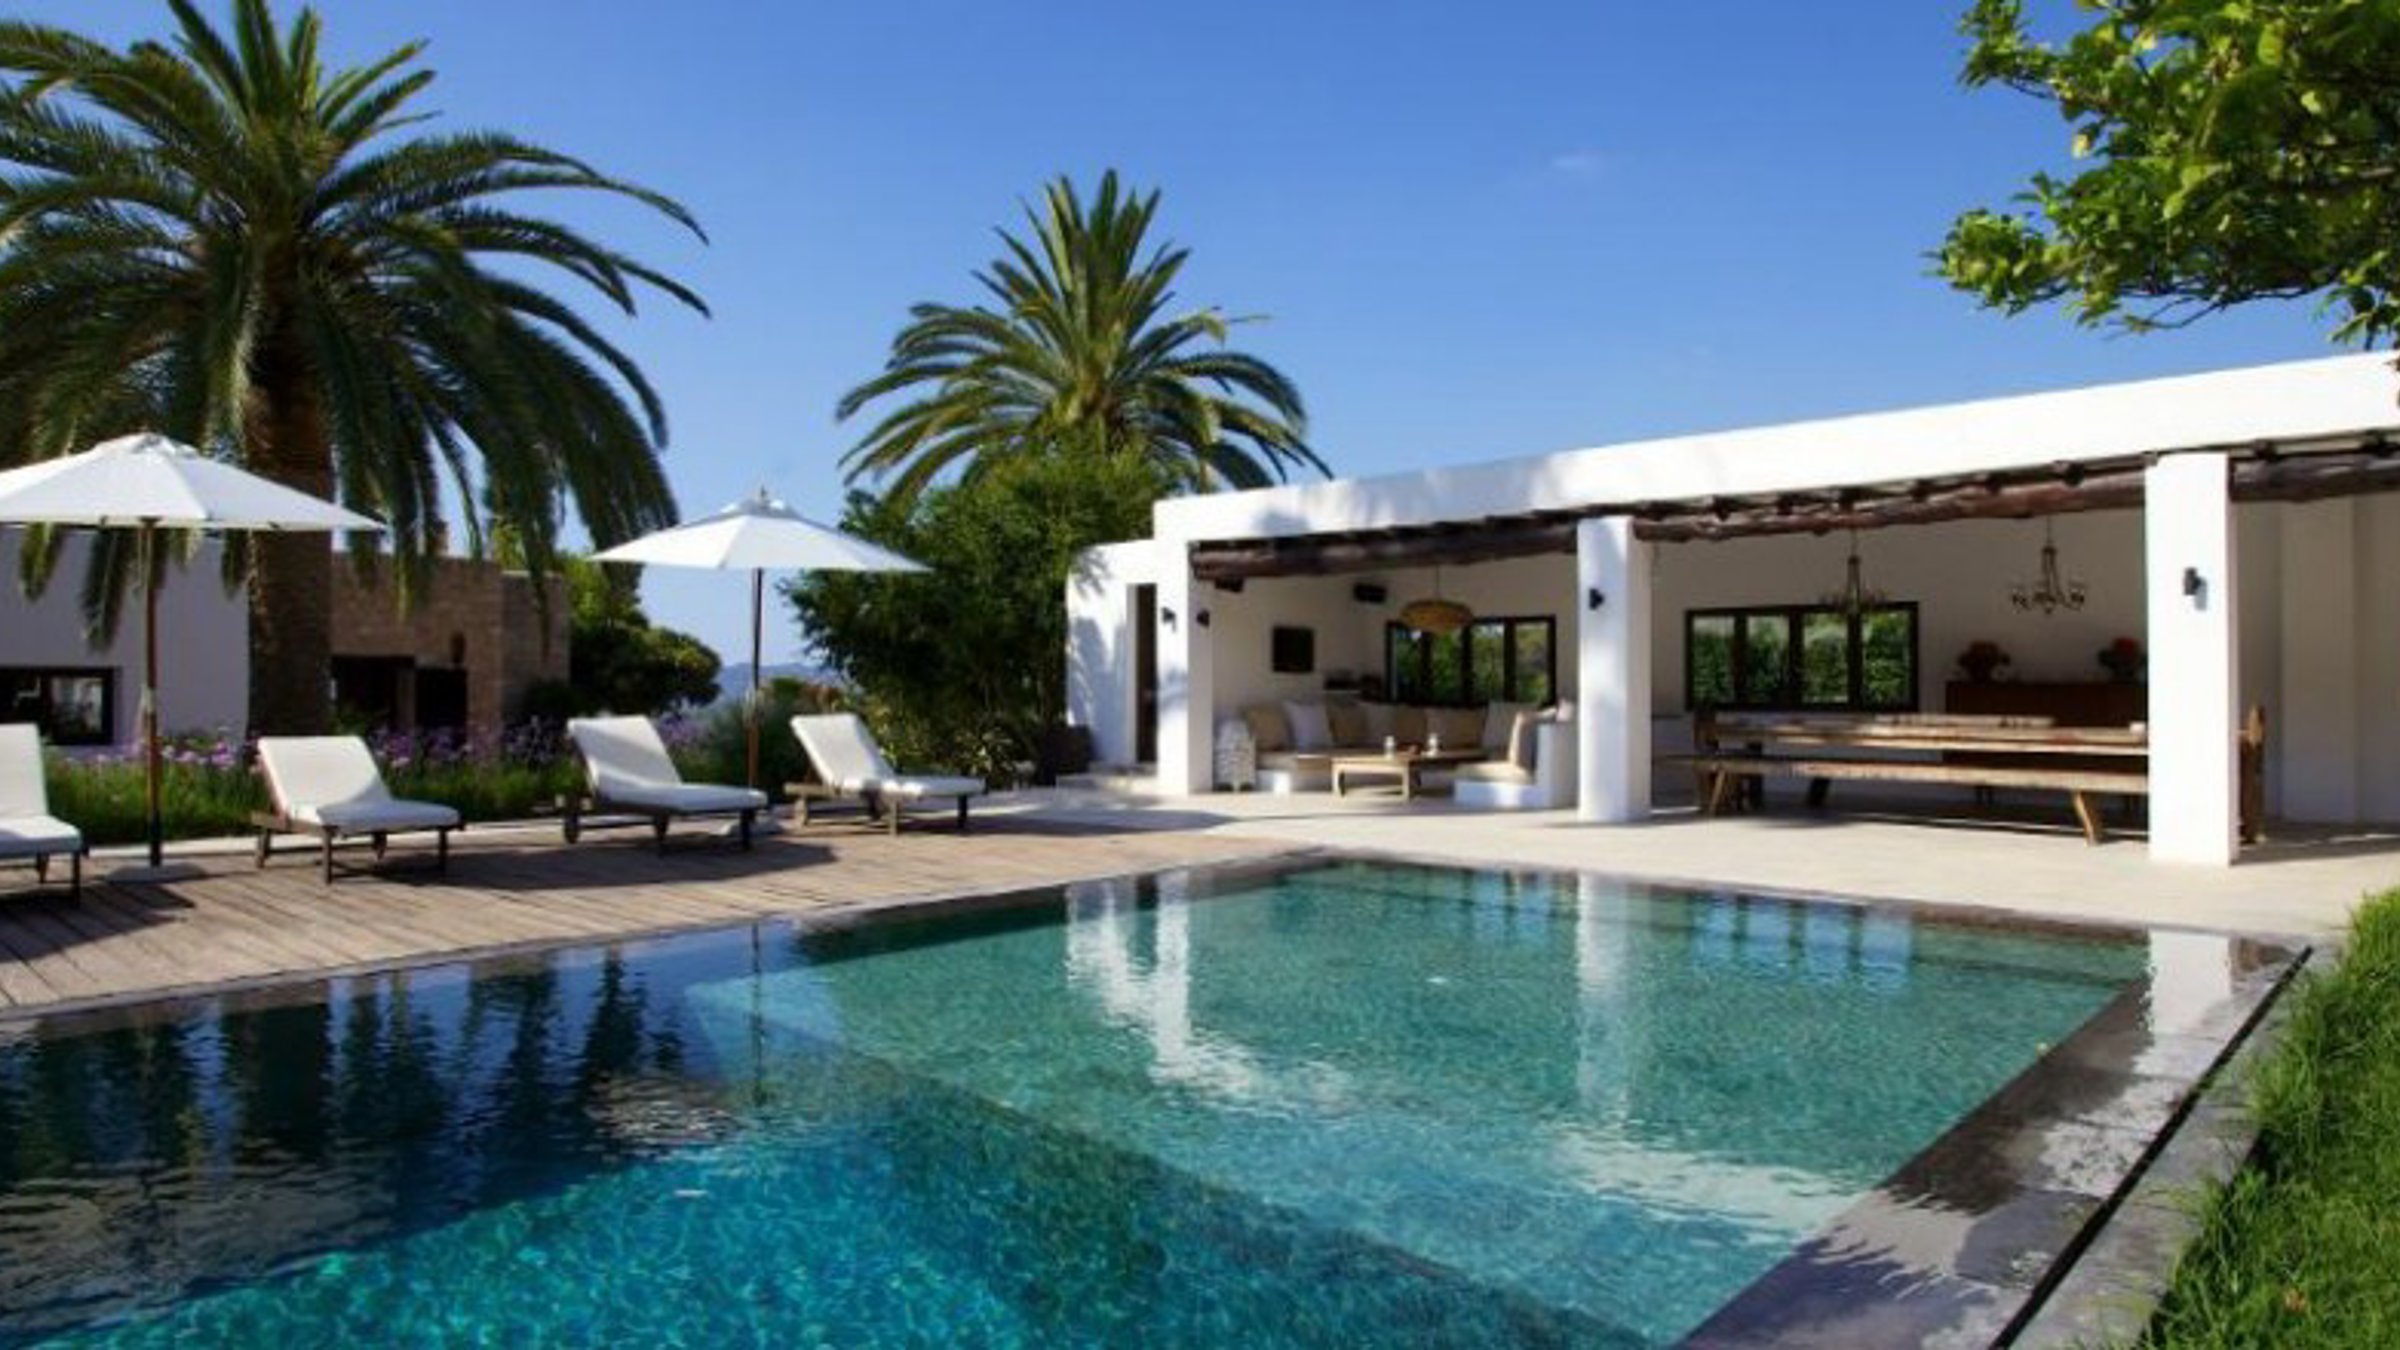 The Best Family Villas in Ibiza